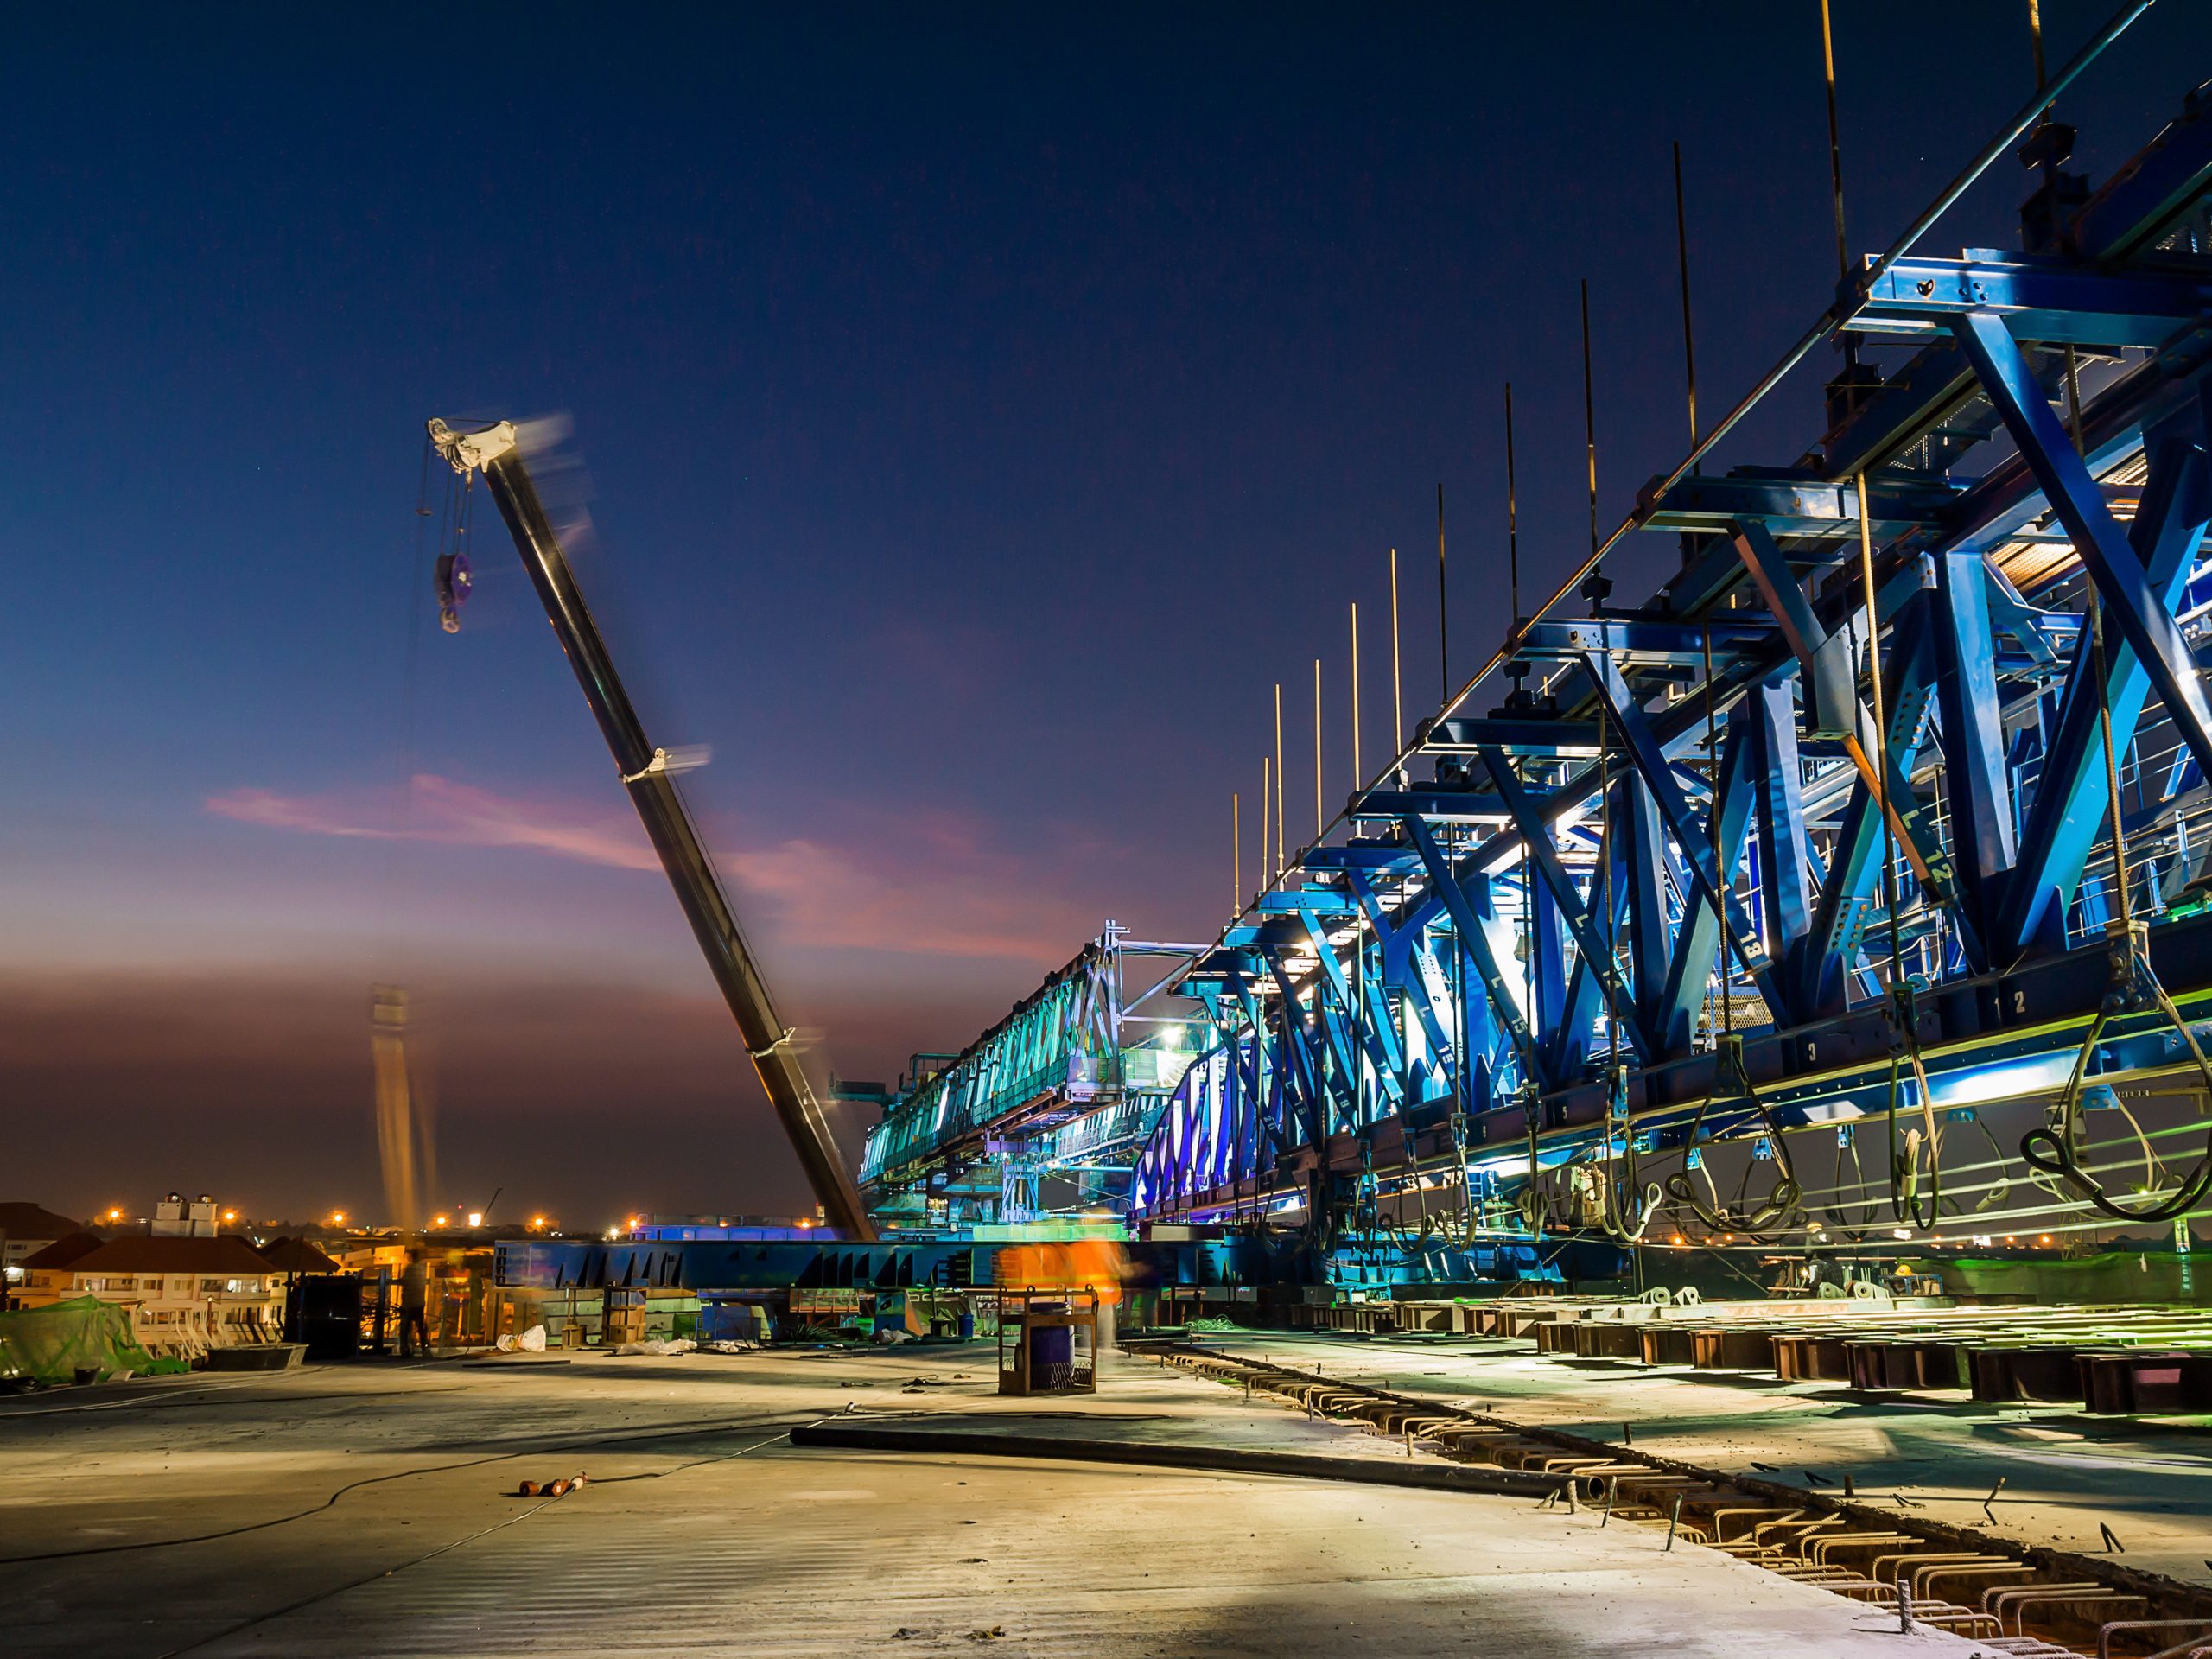 Express way construction site while bridge girder erection machine working at twilight